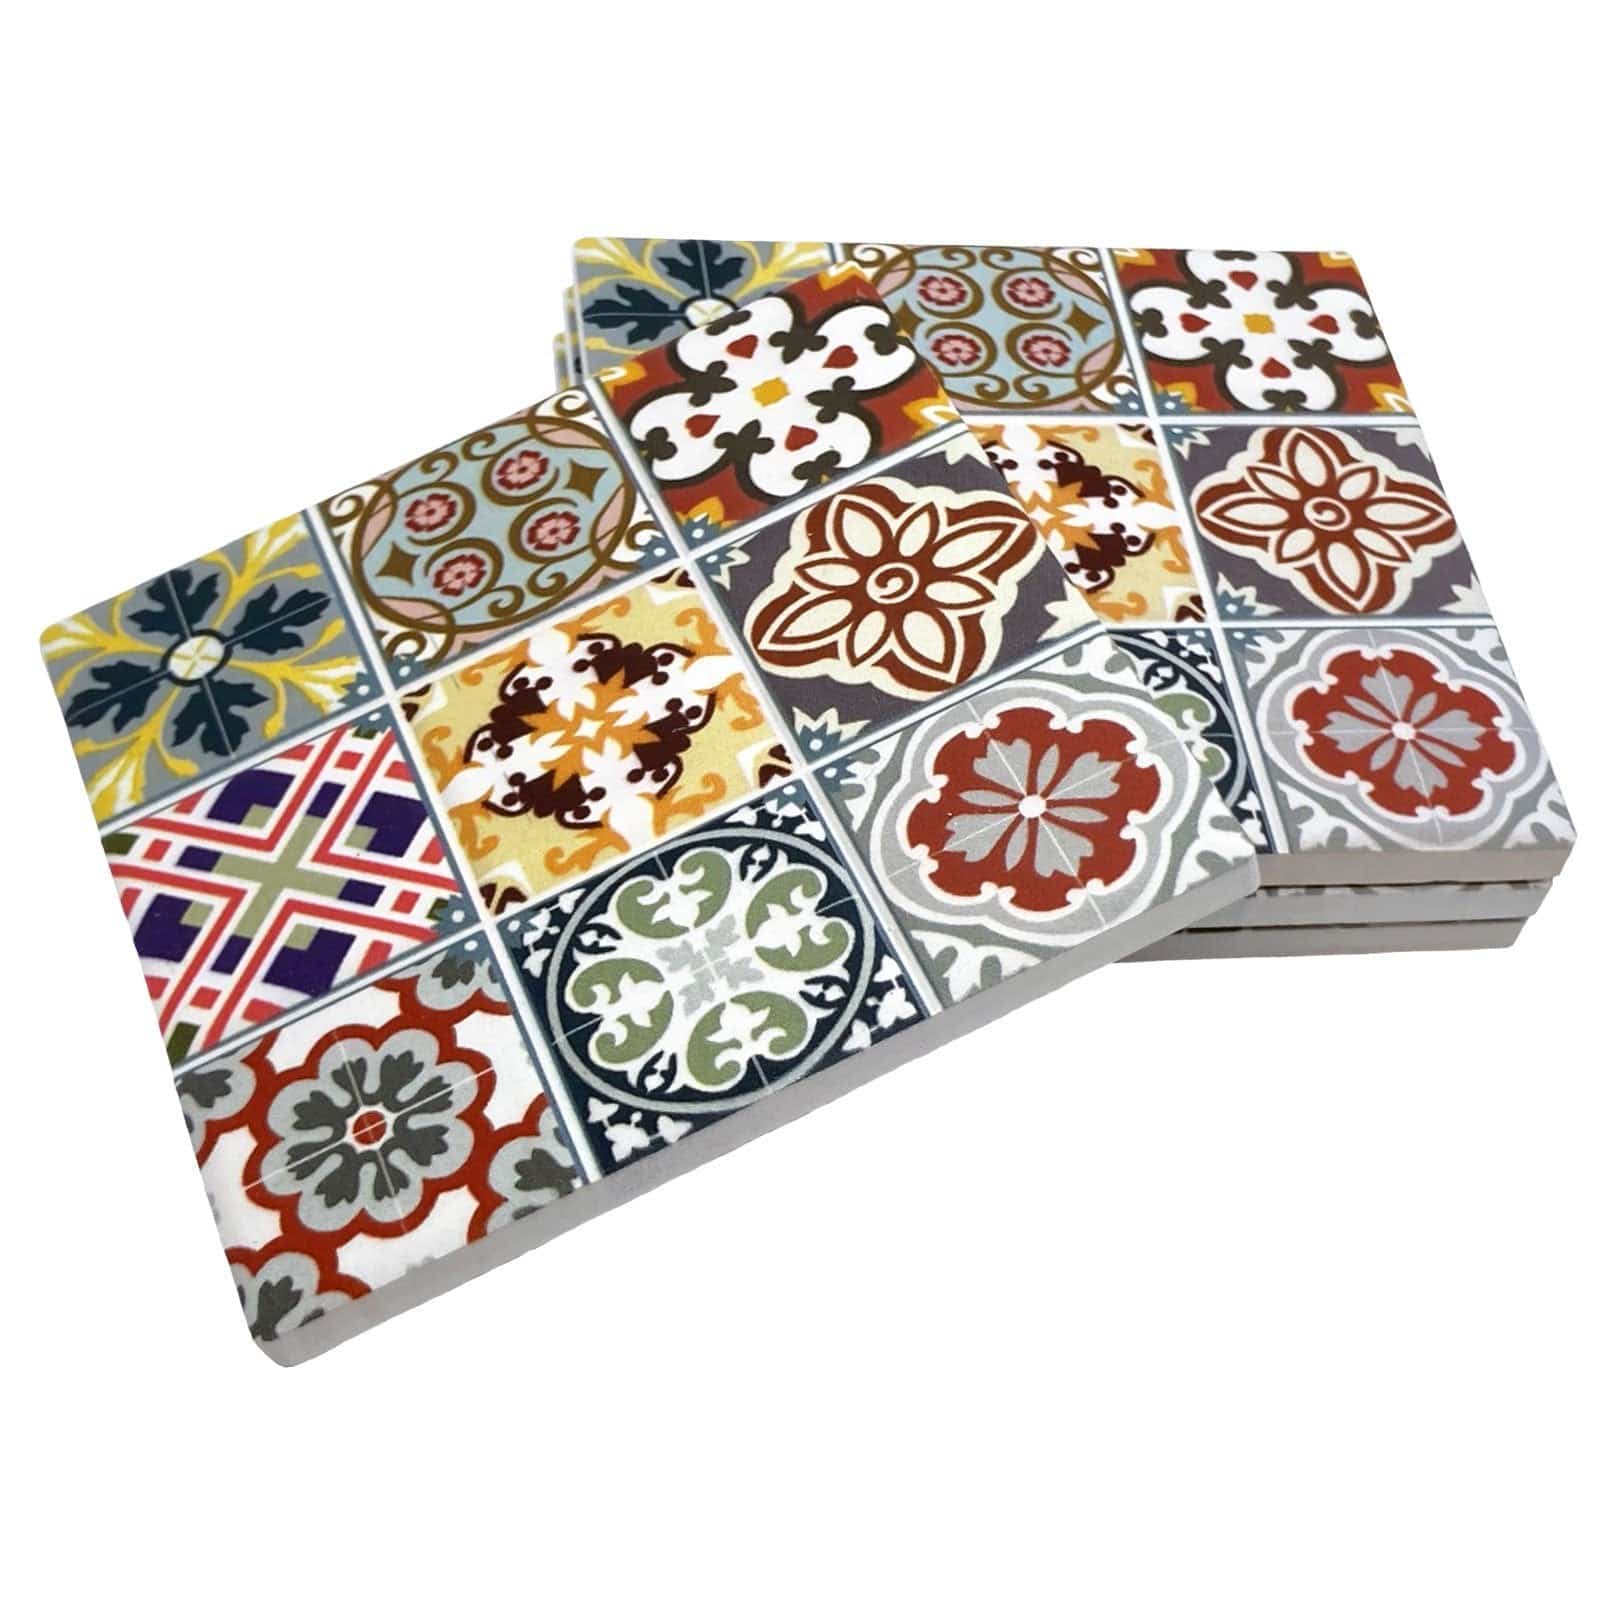 Moroccan Tile Coasters - Design 4 - Set of 4